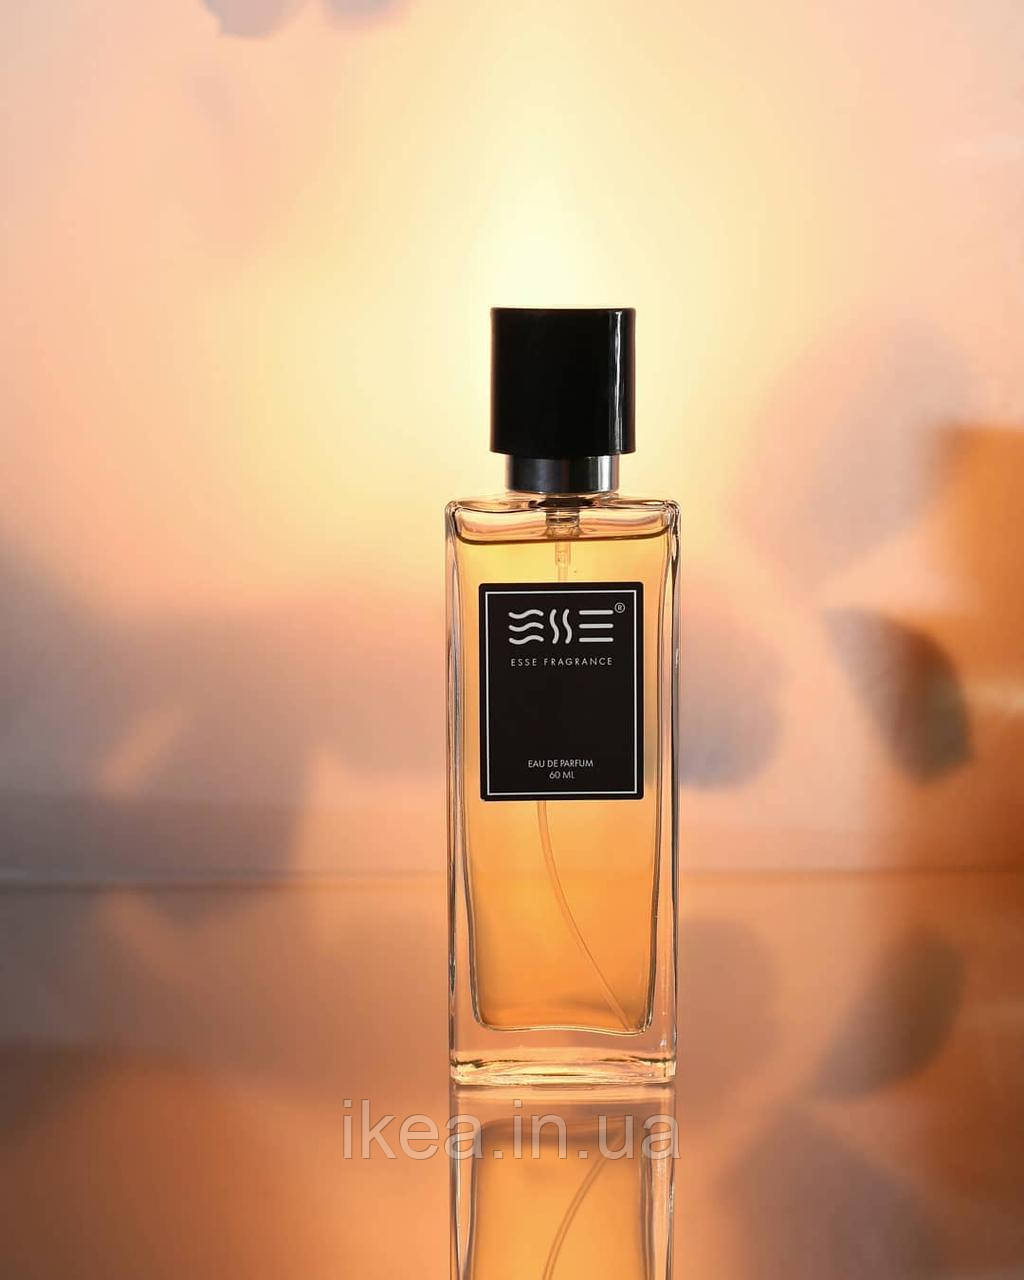 Жіночі парфуми аналог Bamboo Gucci 60 мл парфумована вода Esse fragrance No85